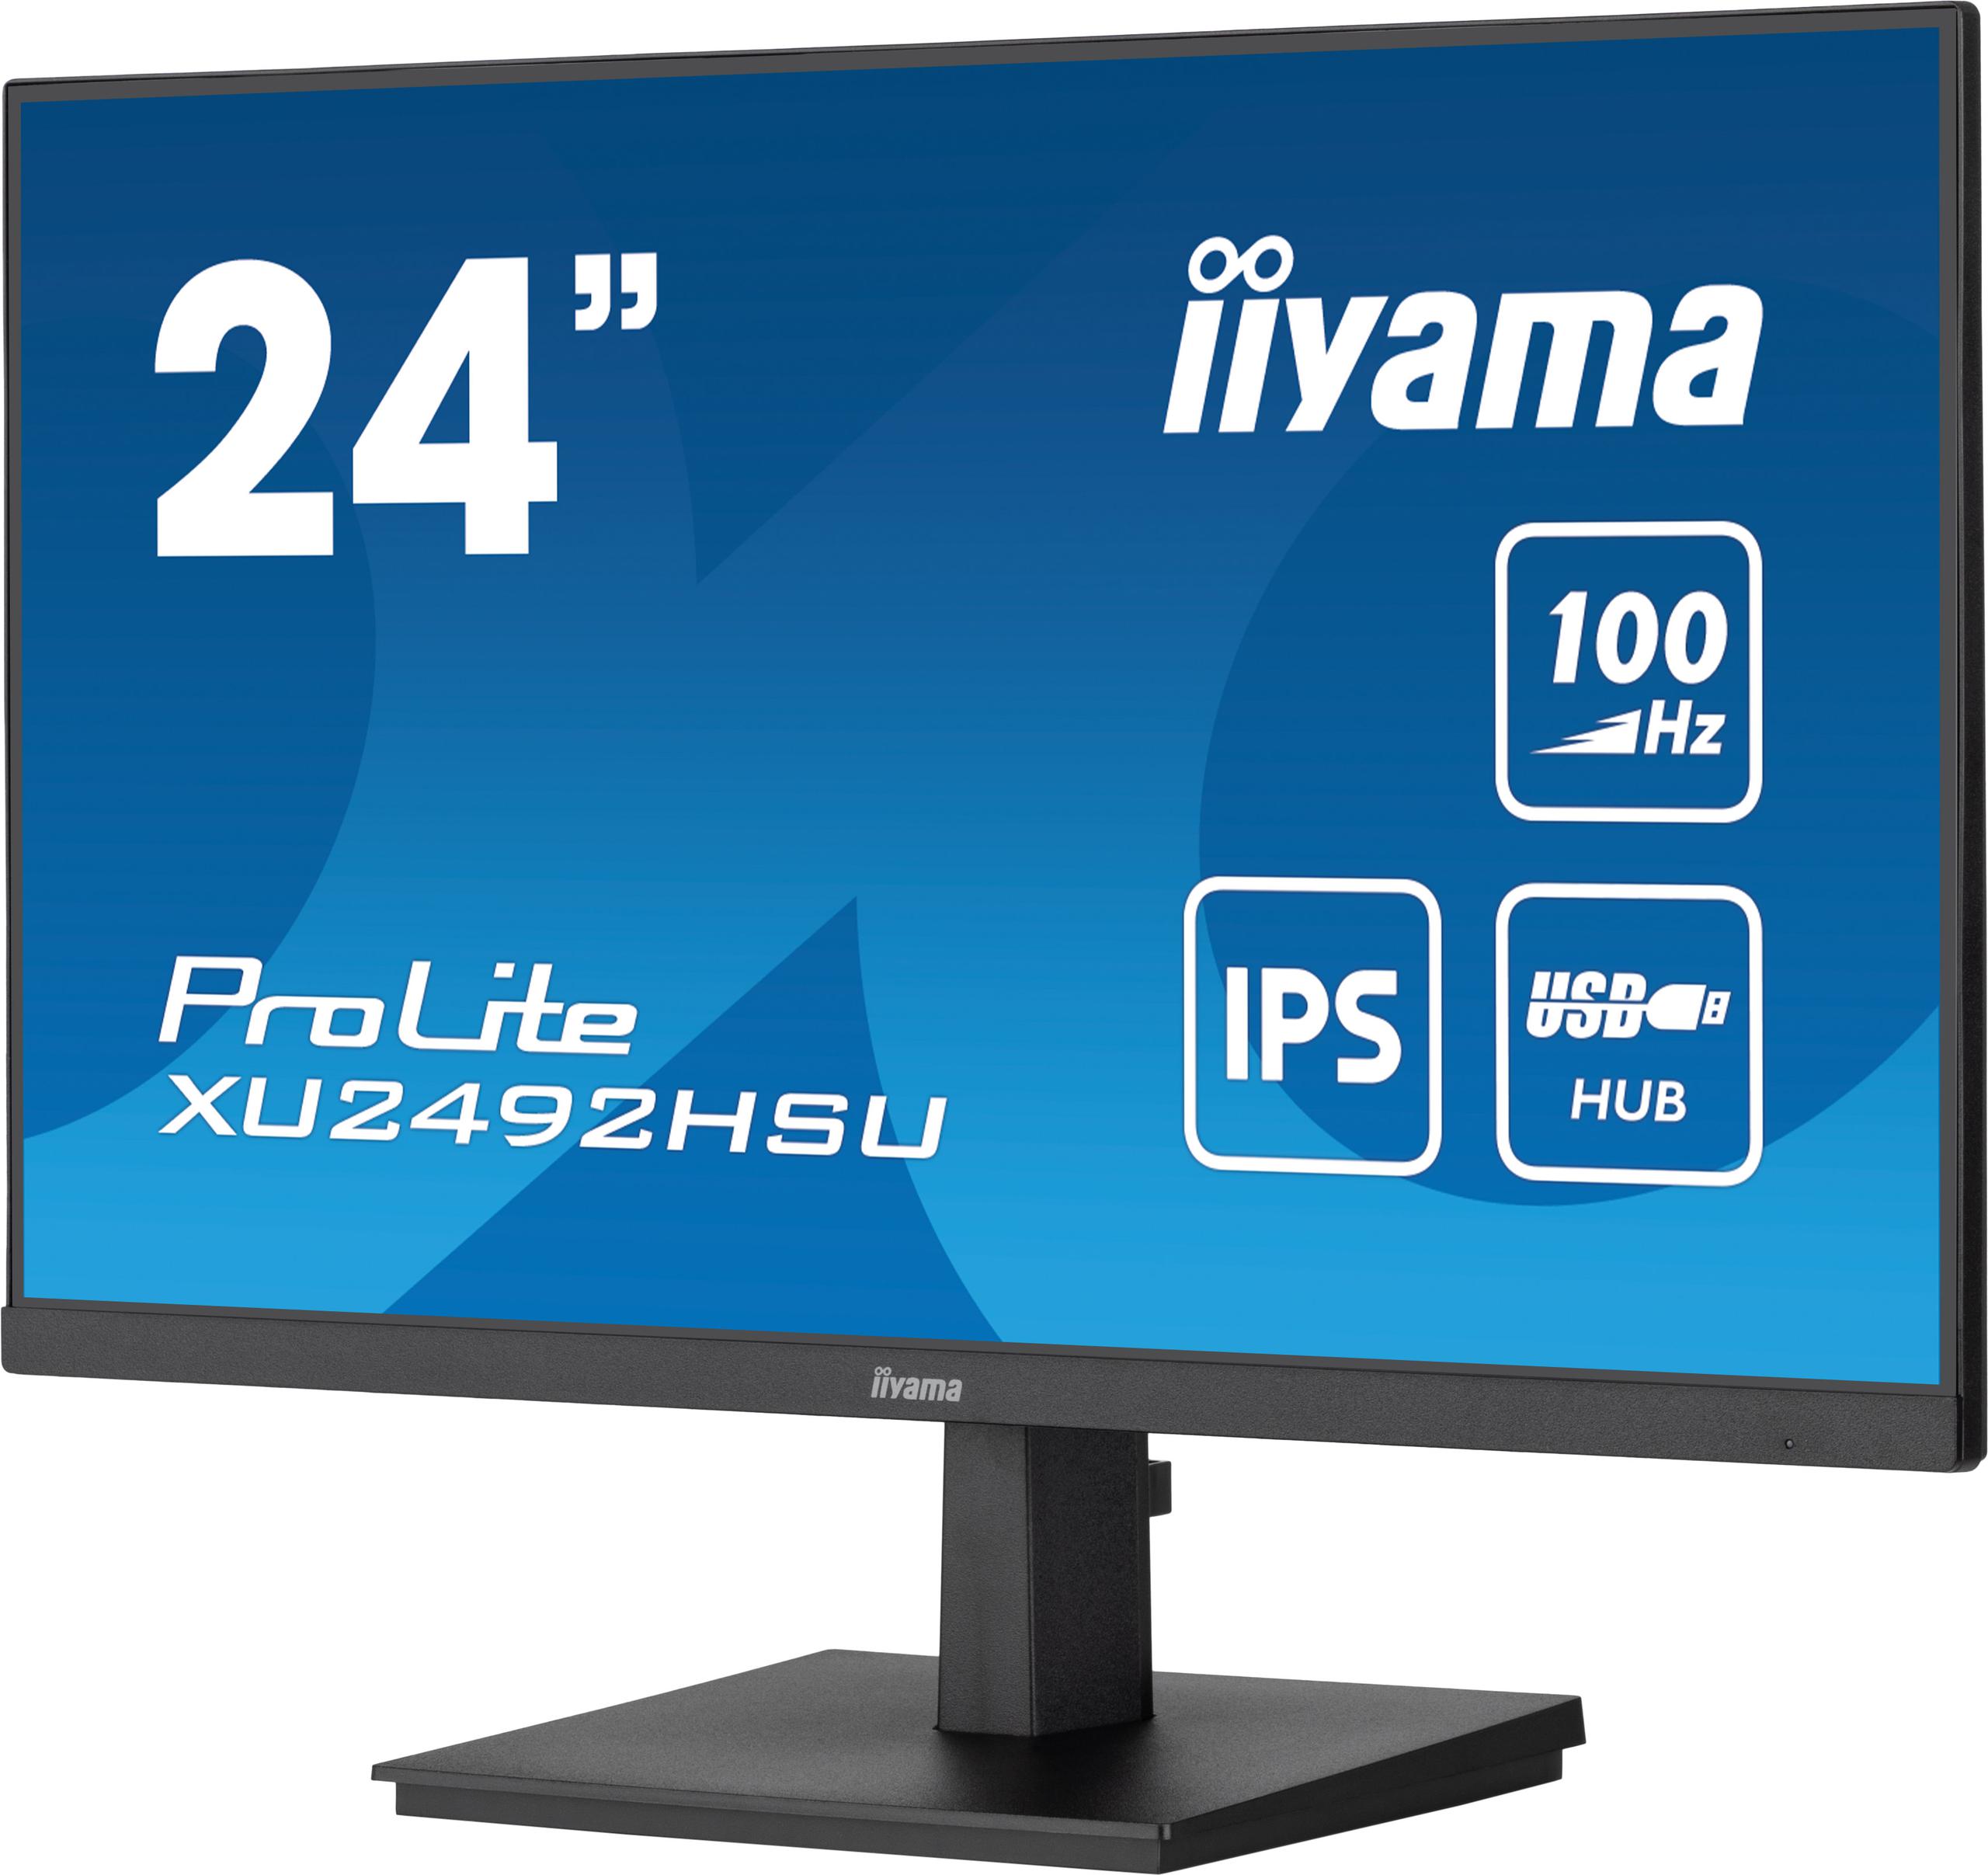 Monitor LED IIYAMA XU2492HSU-B6 24 cale Ultra Slim IPS USB - najważniejsze cechy: